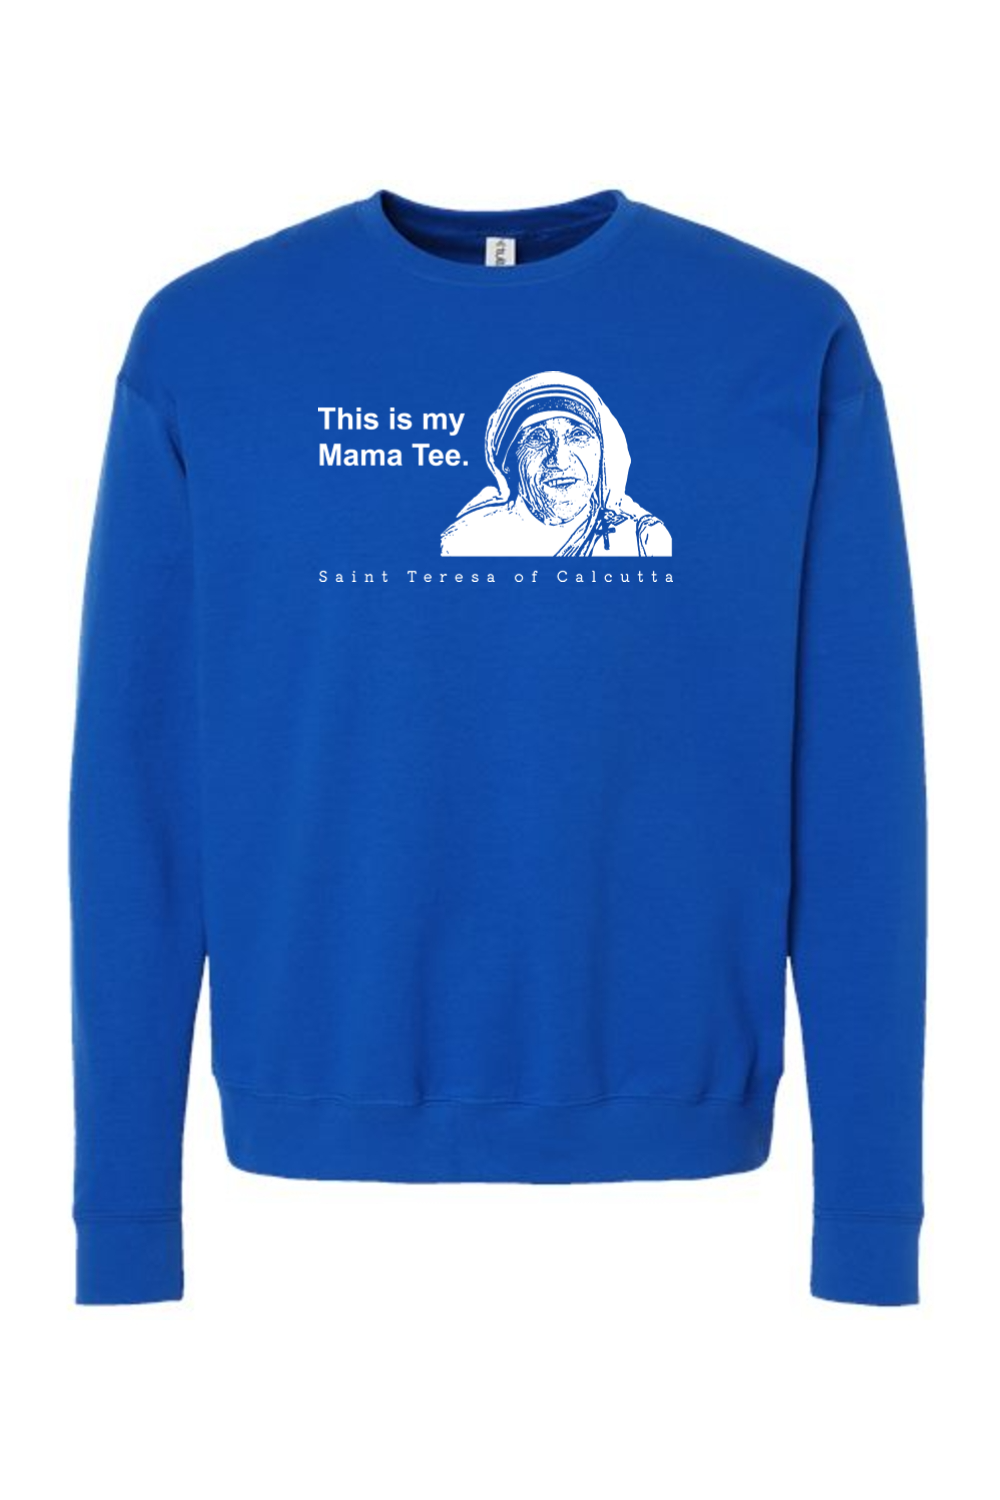 Mama Tee - Mother Teresa Crewneck Sweatshirt